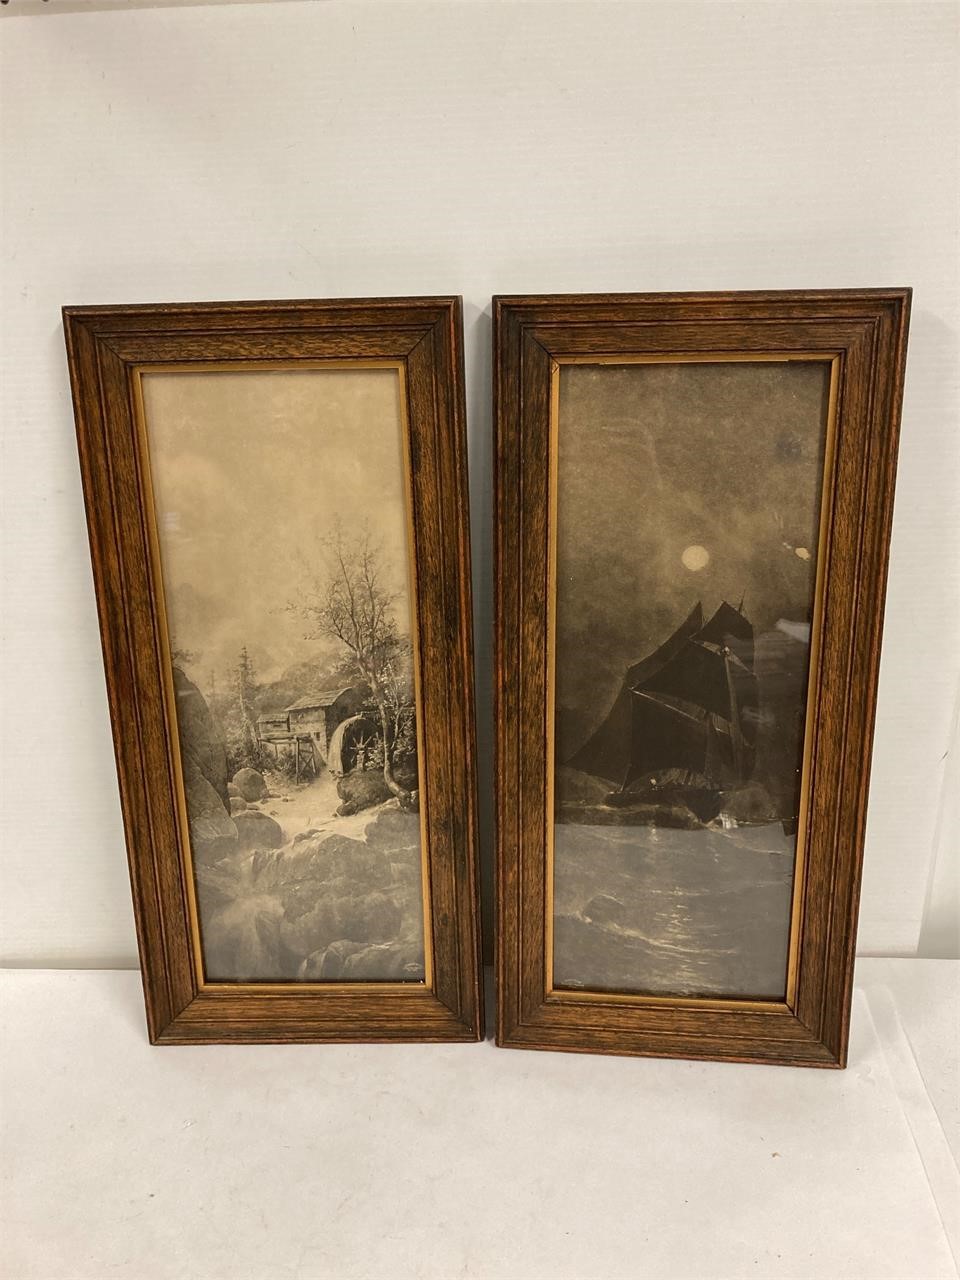 2 antique pictures. 9.75” x 21” framed